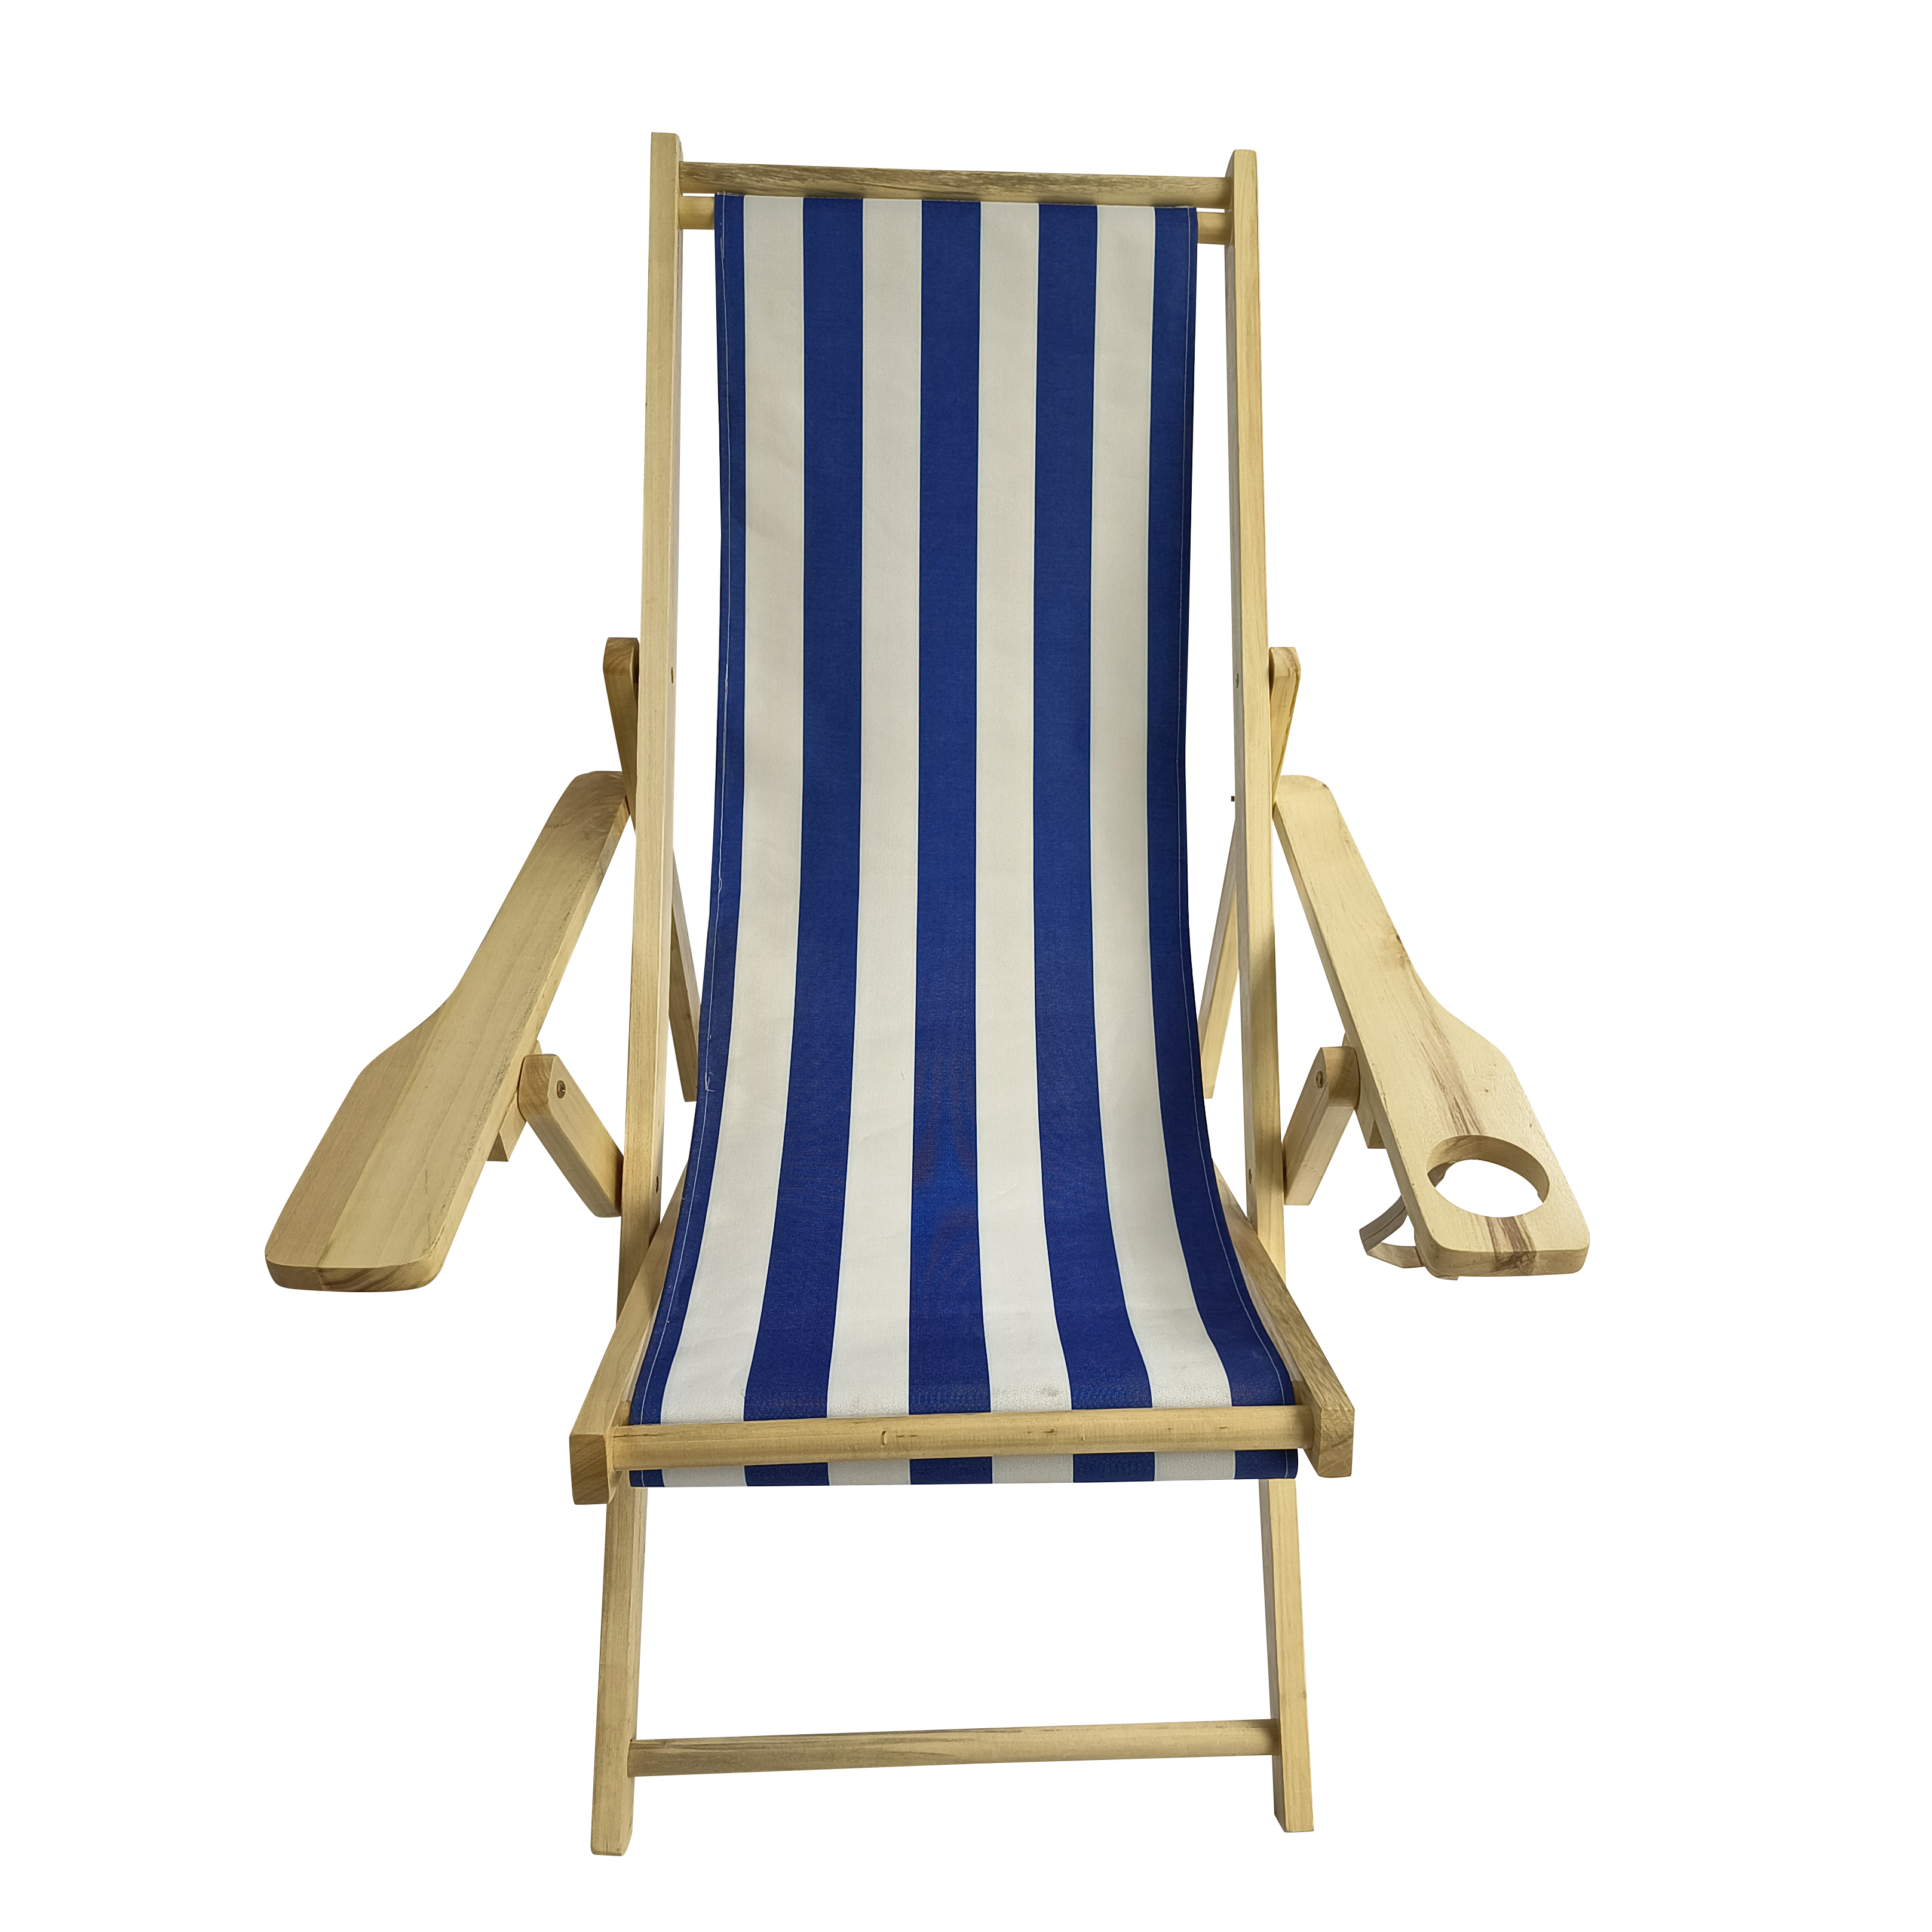 Outdoor Poplar Hanging Chair  Wide Blue Stripes armrest with cup holder (Color: Dark Blue)